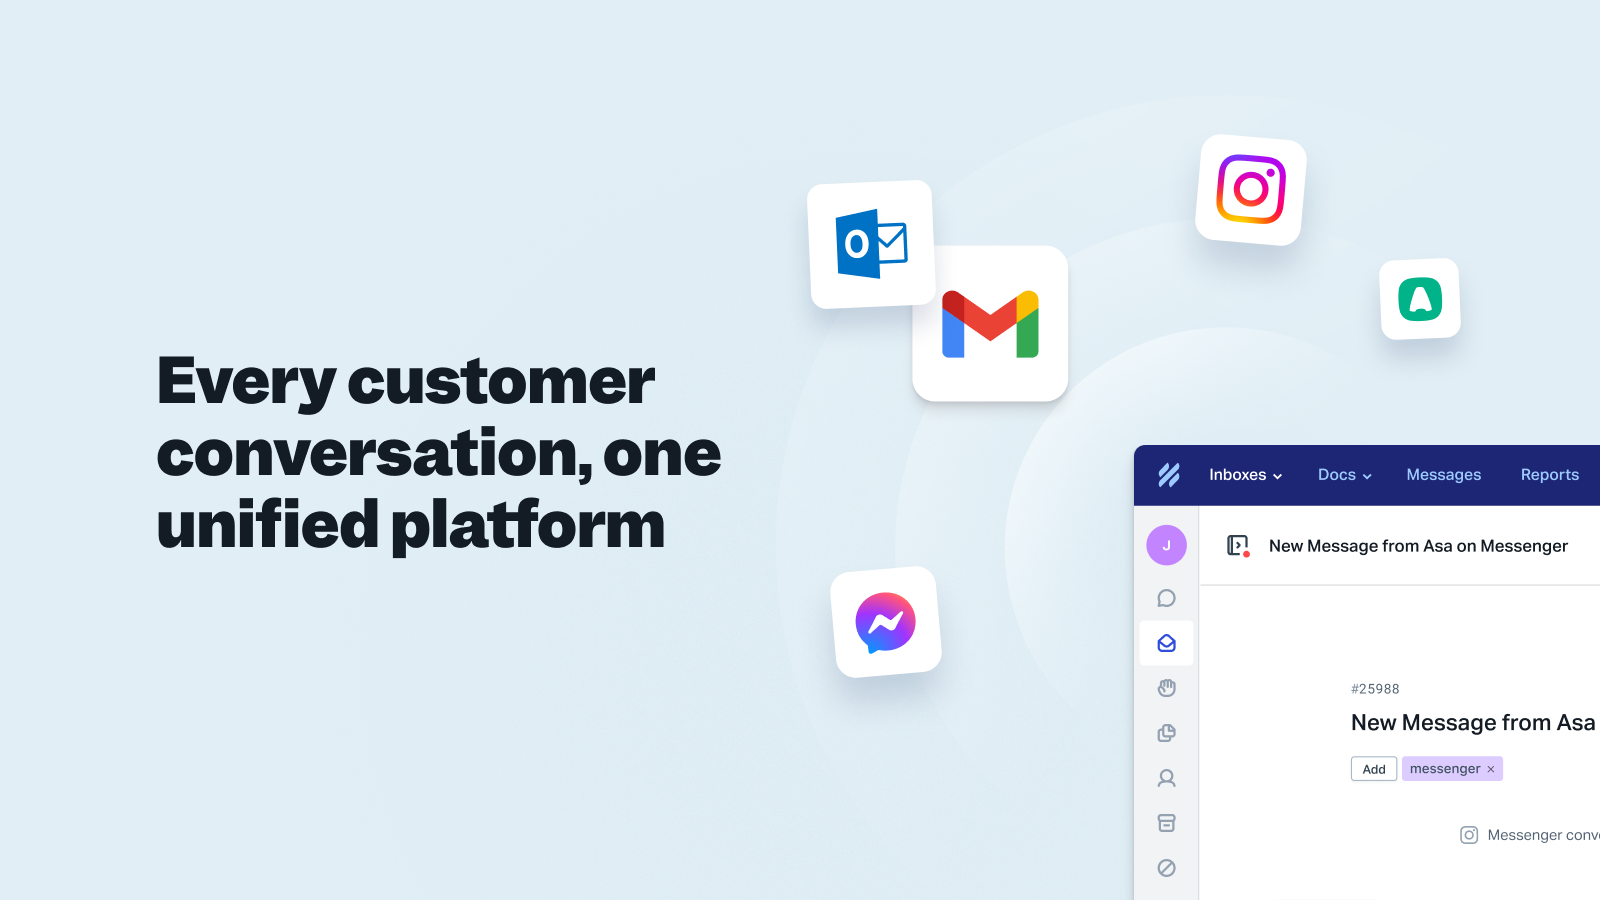 Every customer conversation, one unified platform